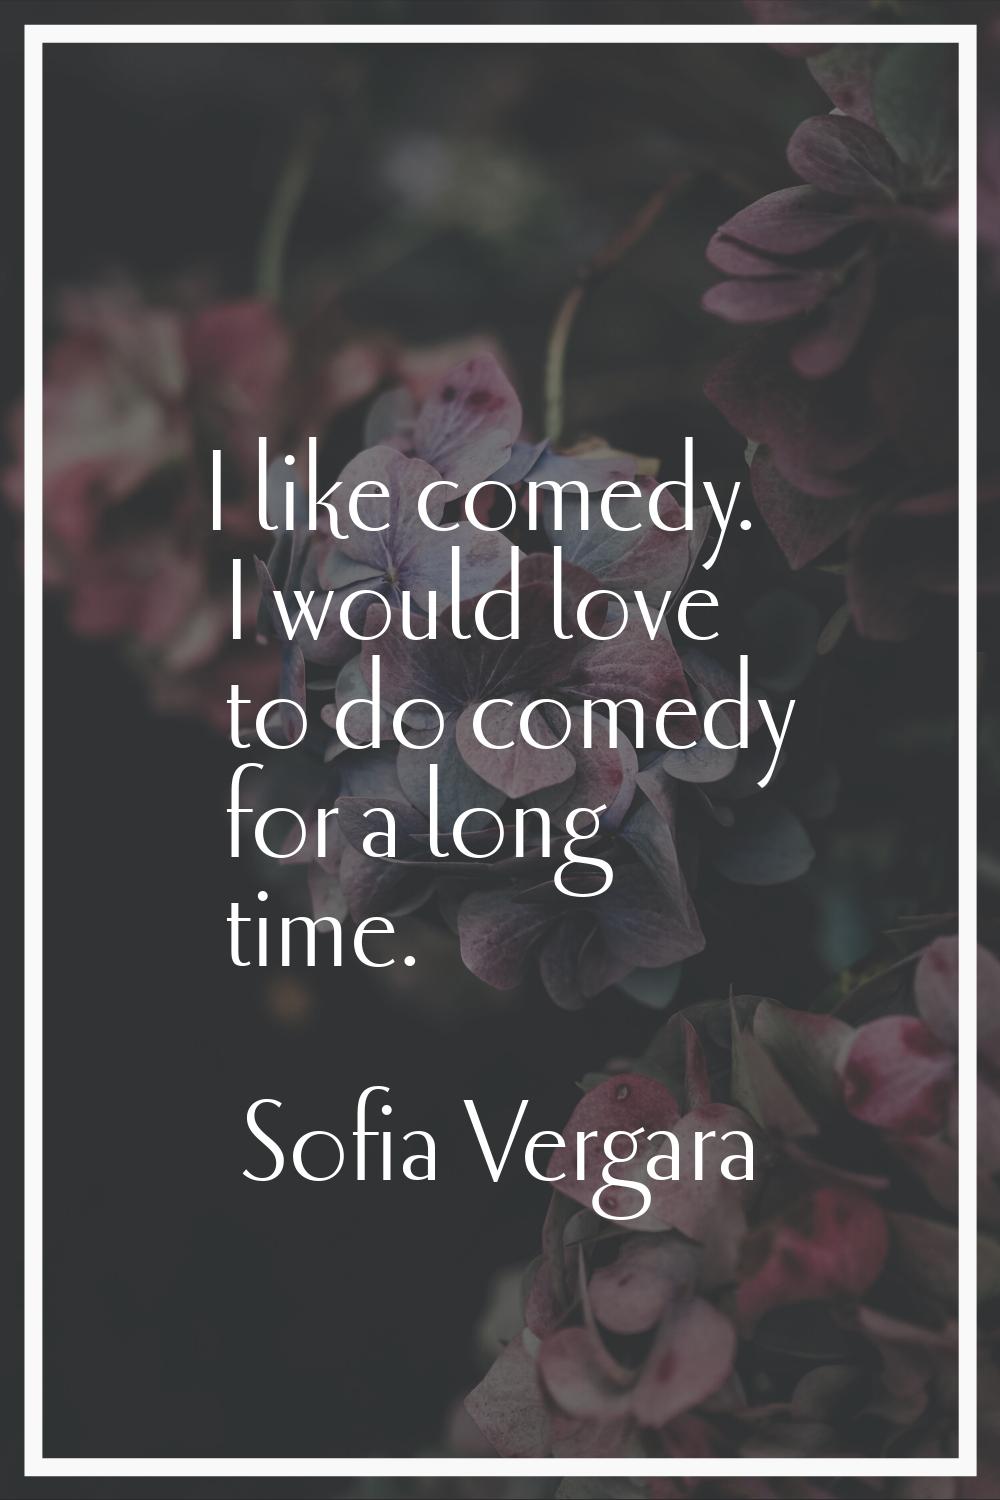 I like comedy. I would love to do comedy for a long time.